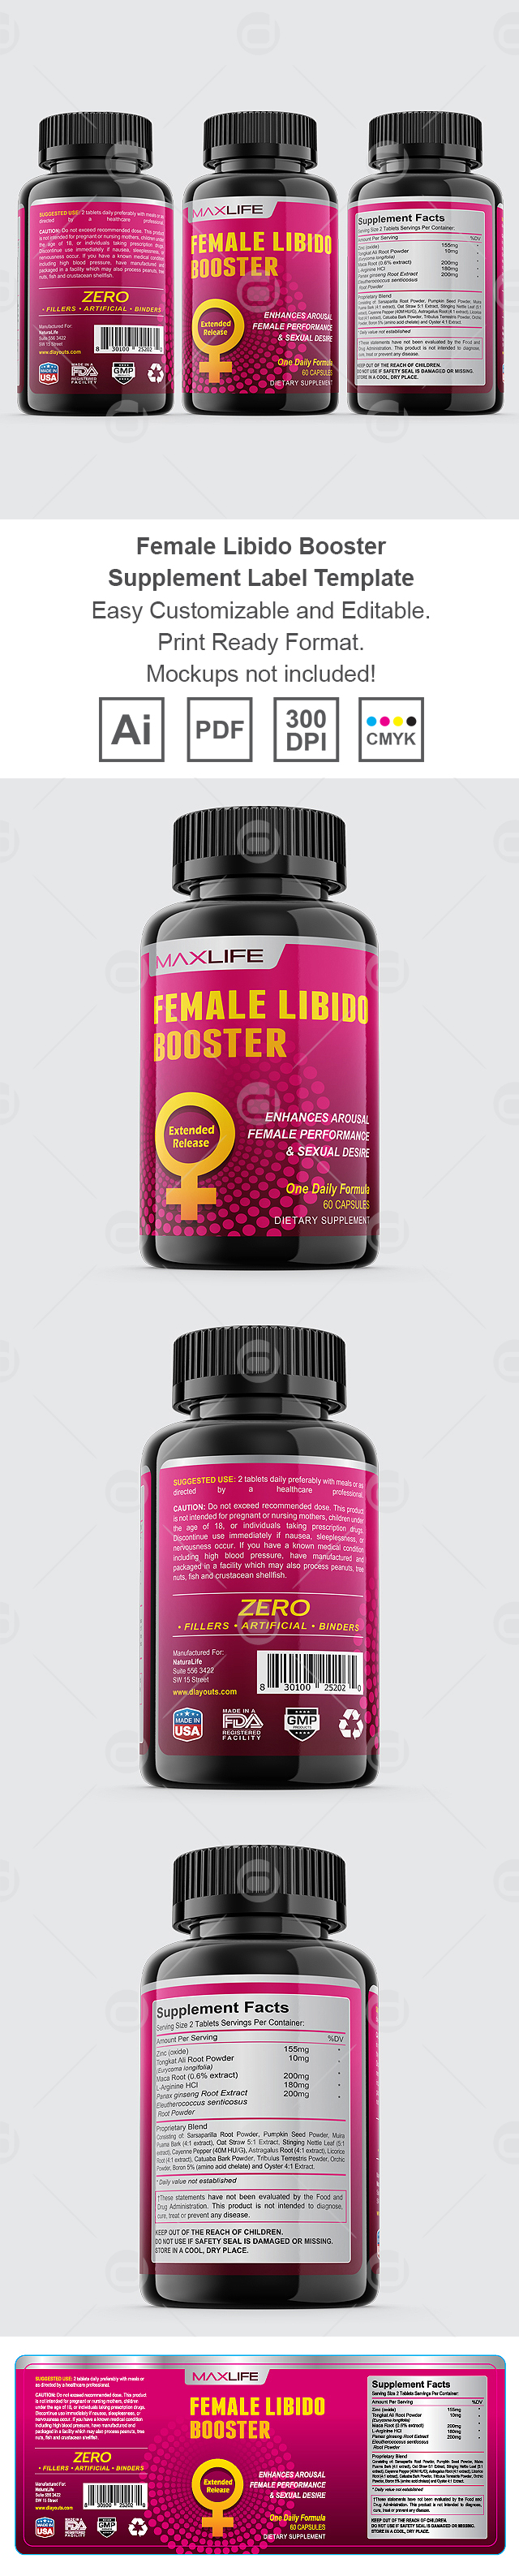 Female Libido Booster Supplement Label Template